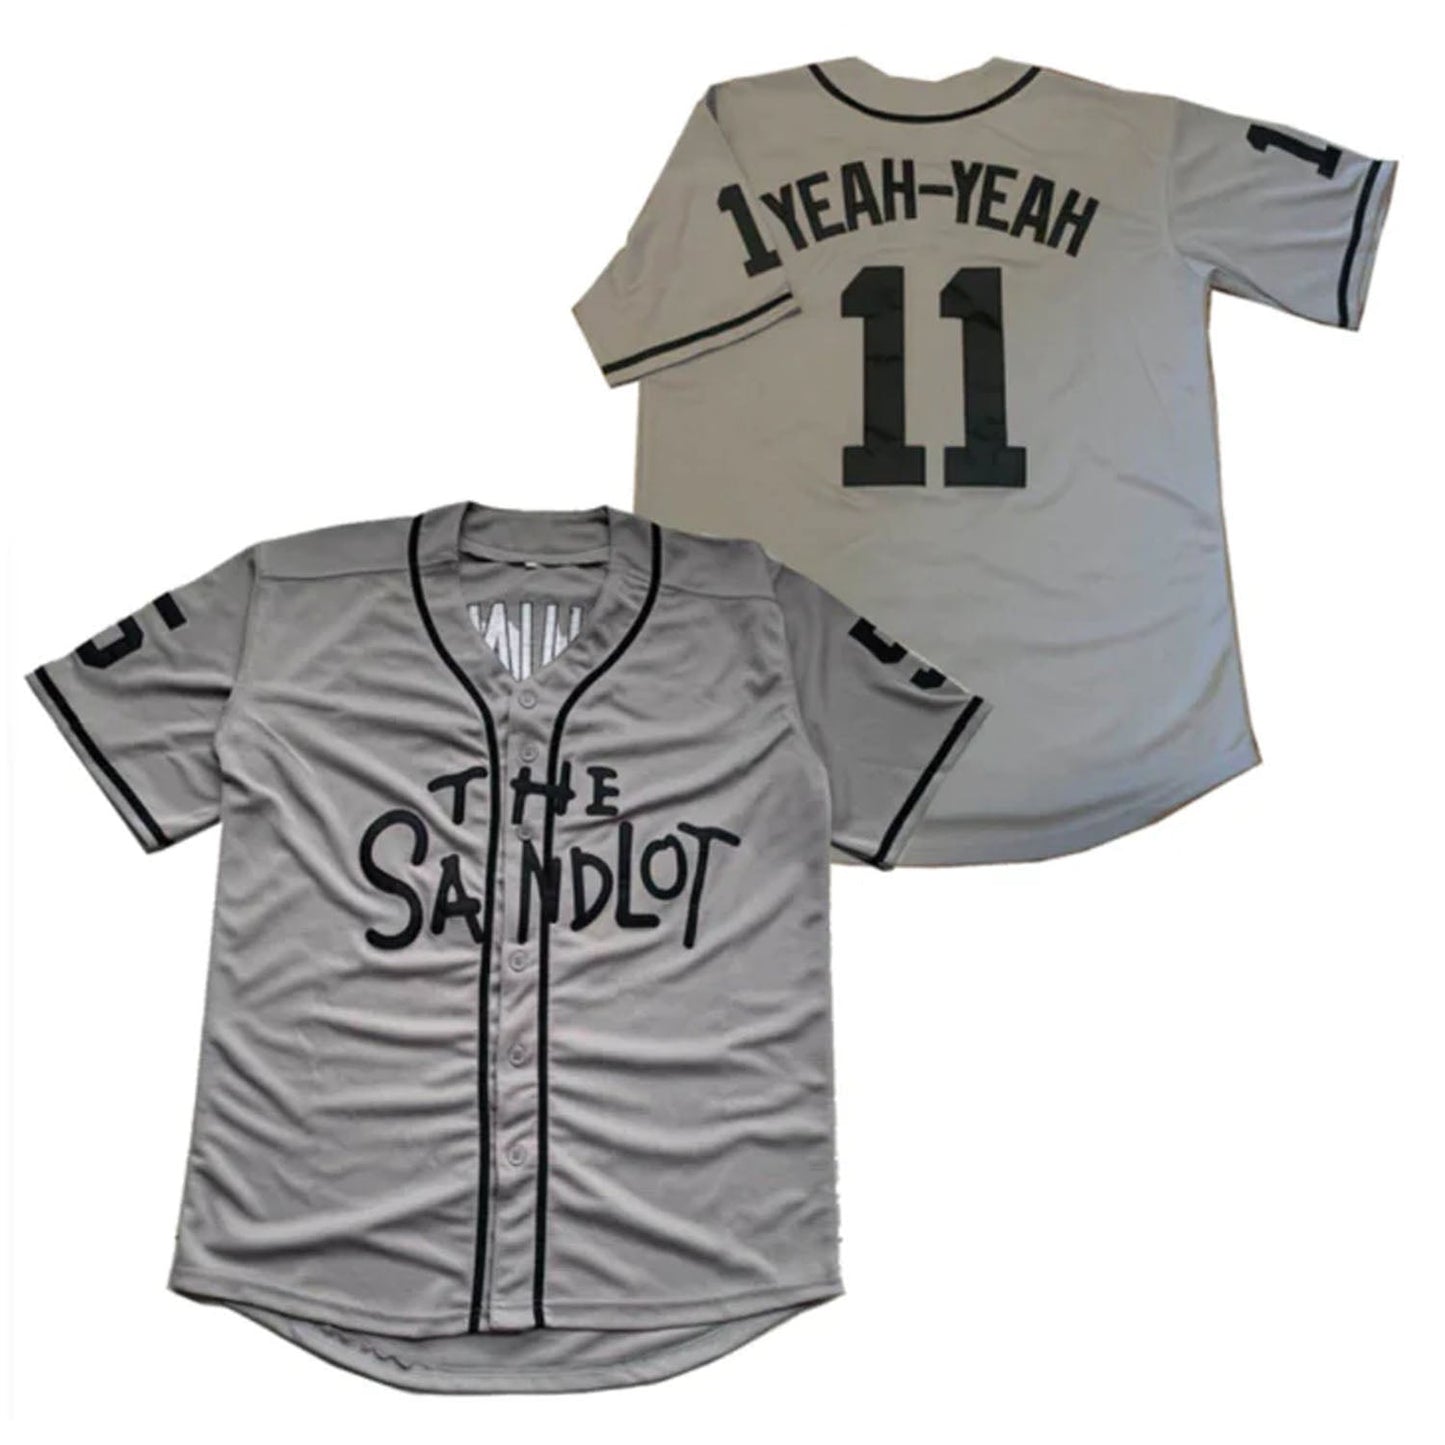 Yeah-Yeah #11 Sandlot Baseball jersey